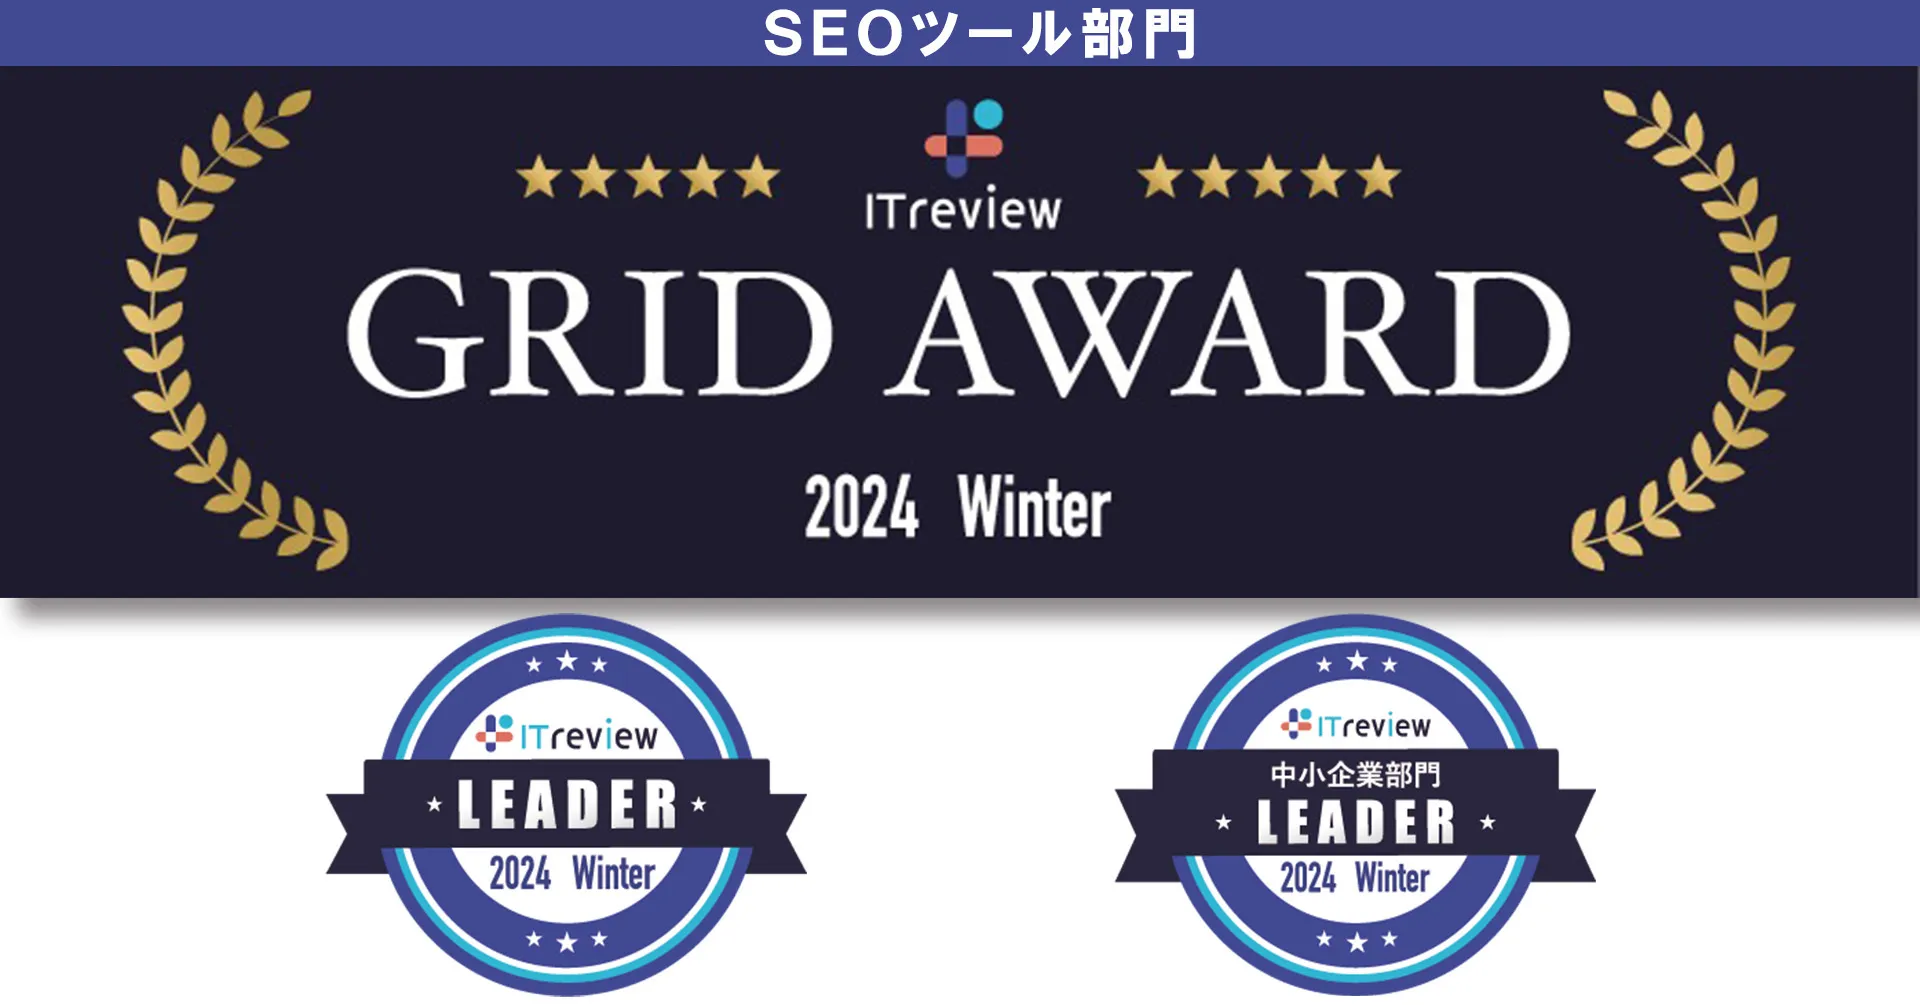 ITreview Grid Award 2024 Winter 「SEOツール」部門 最高賞「Leader」を受賞